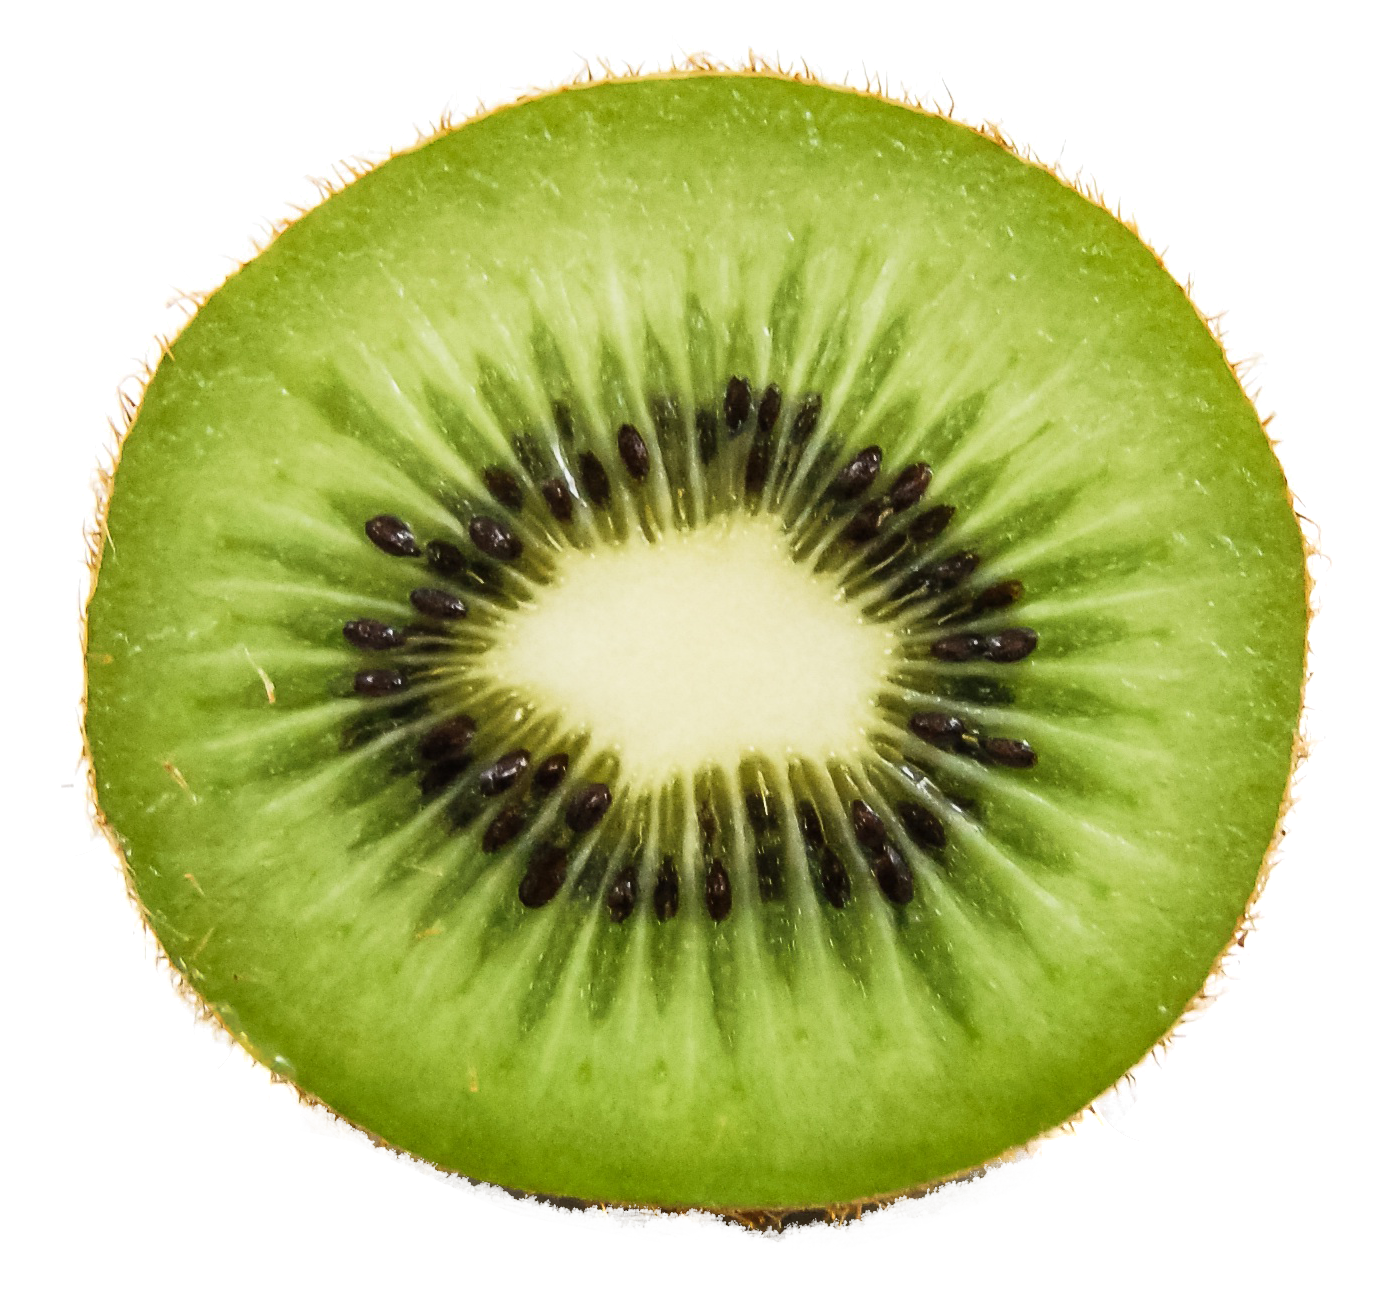 Kiwi Fruit Png Transparent Image - Kiwi, Transparent background PNG HD thumbnail